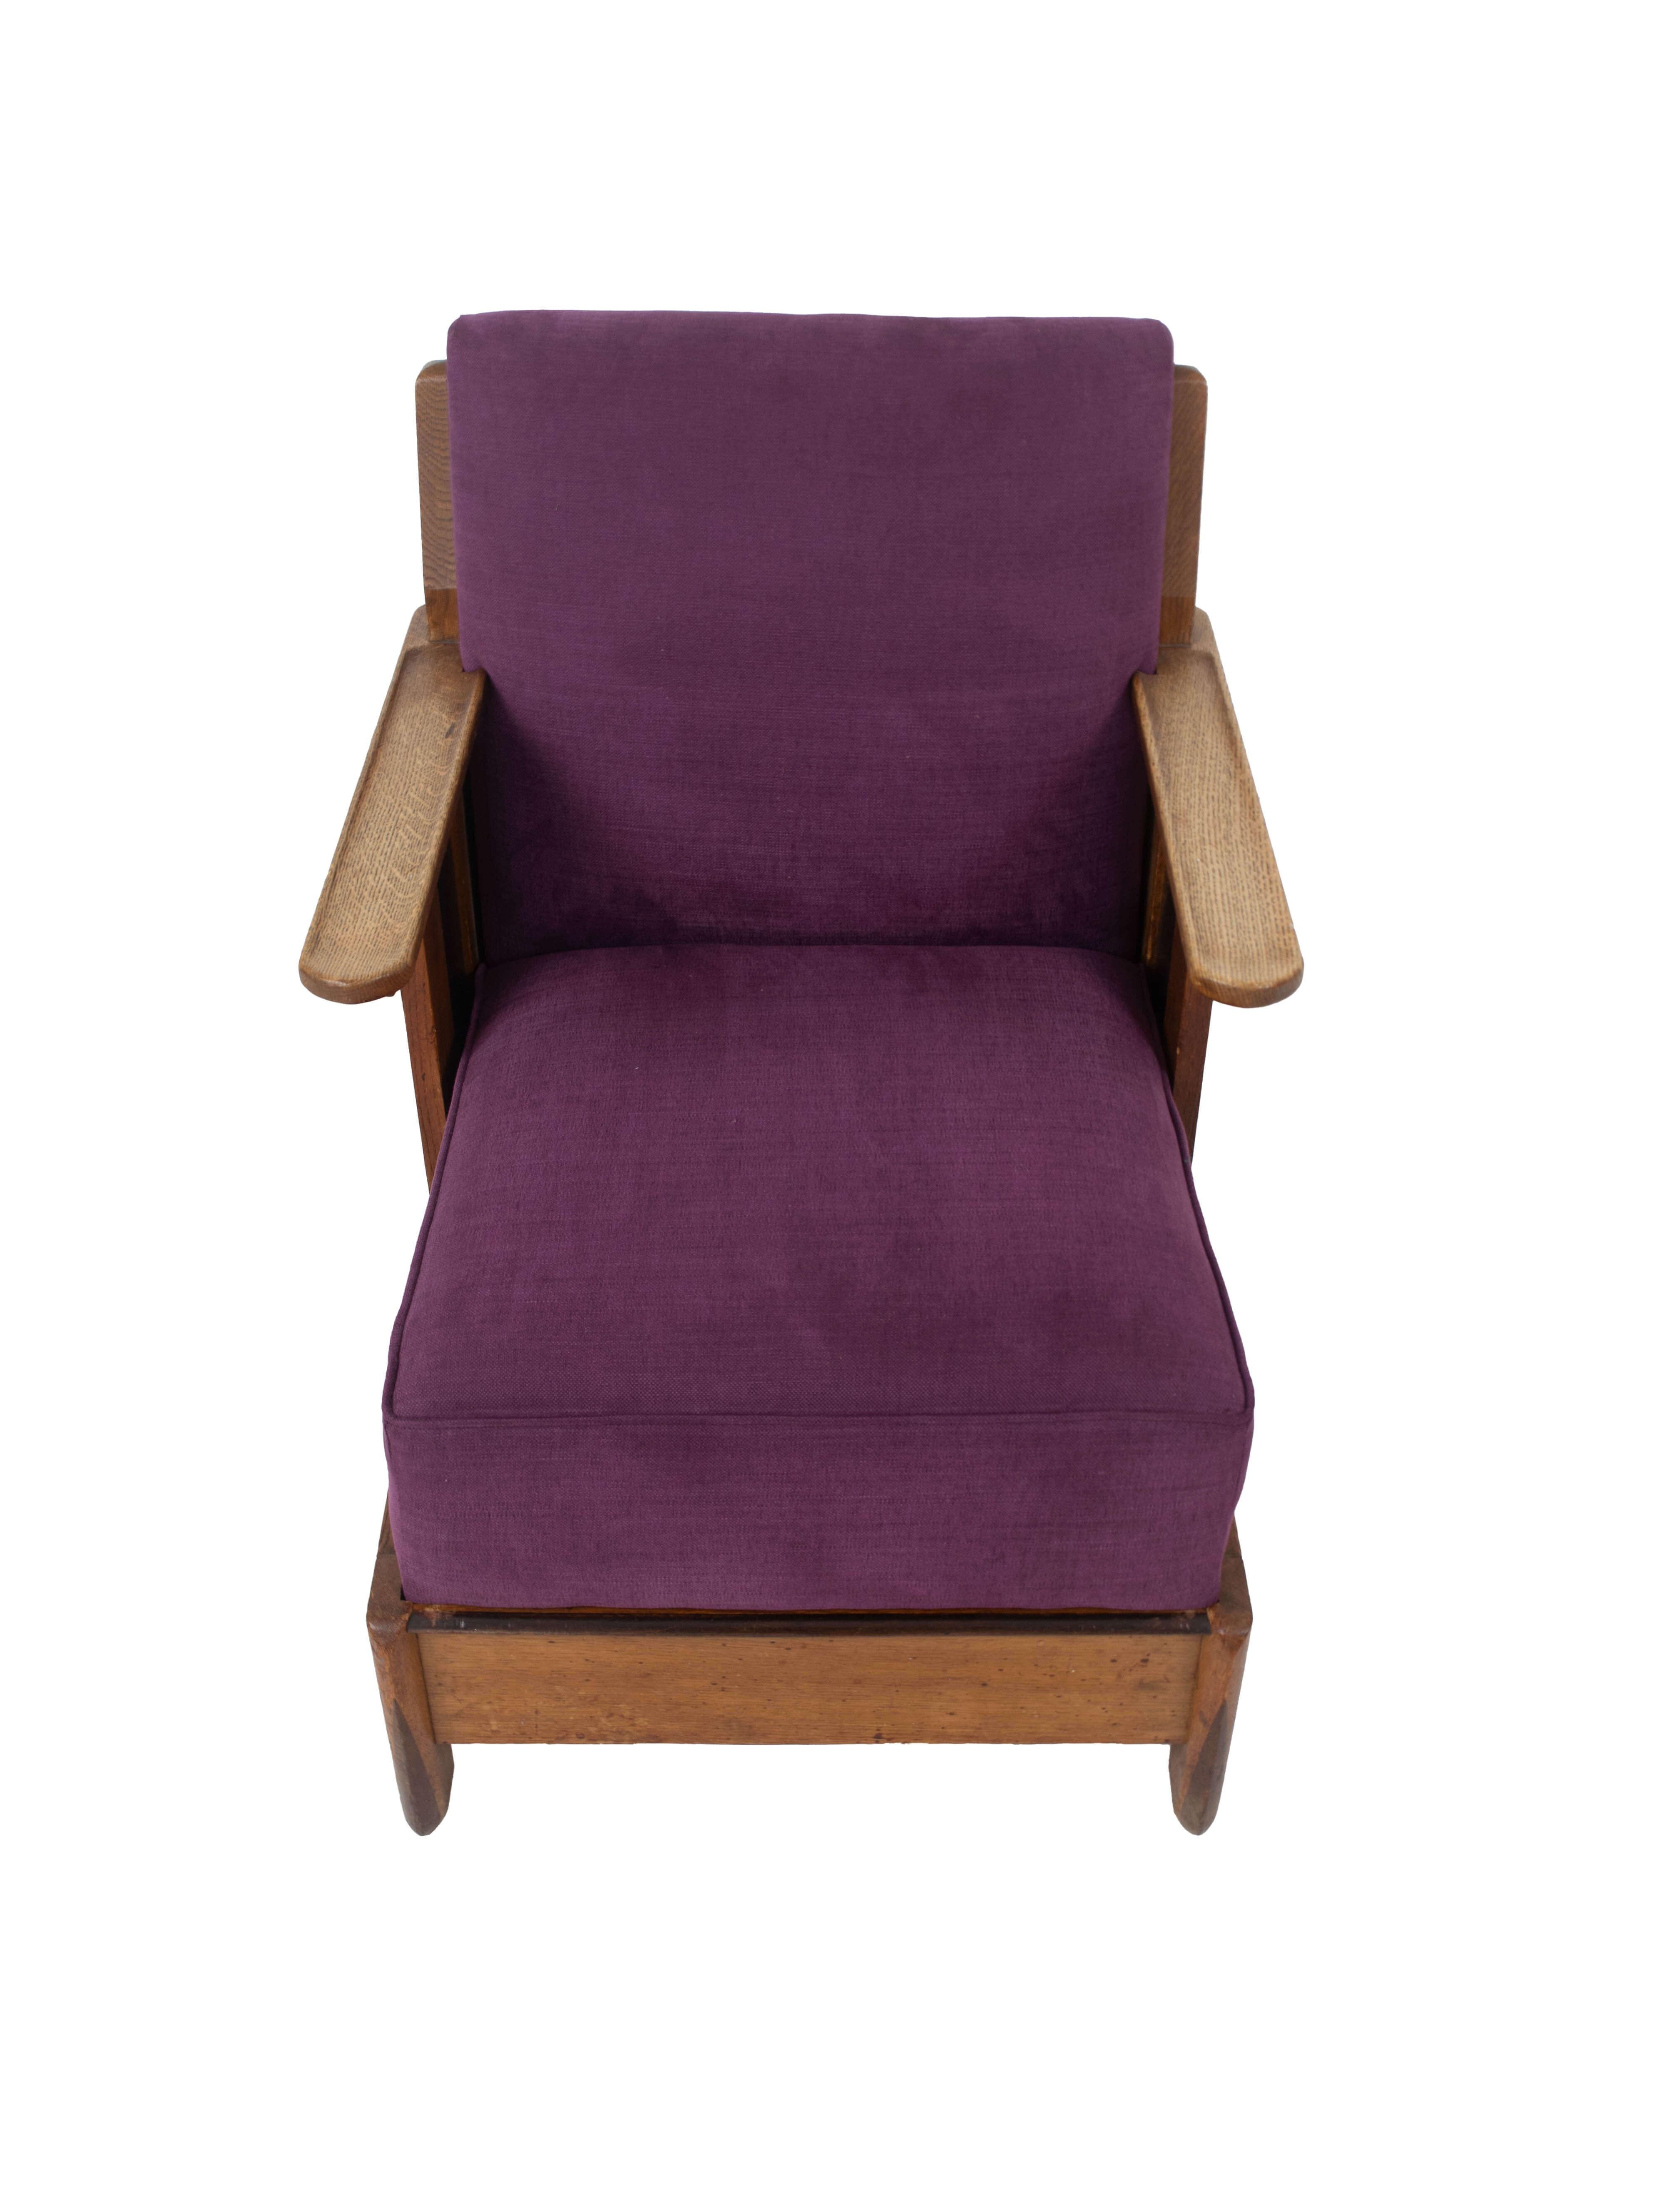 Amsterdam School Armchair in Purple Fabric, The Netherlands 1930s 1